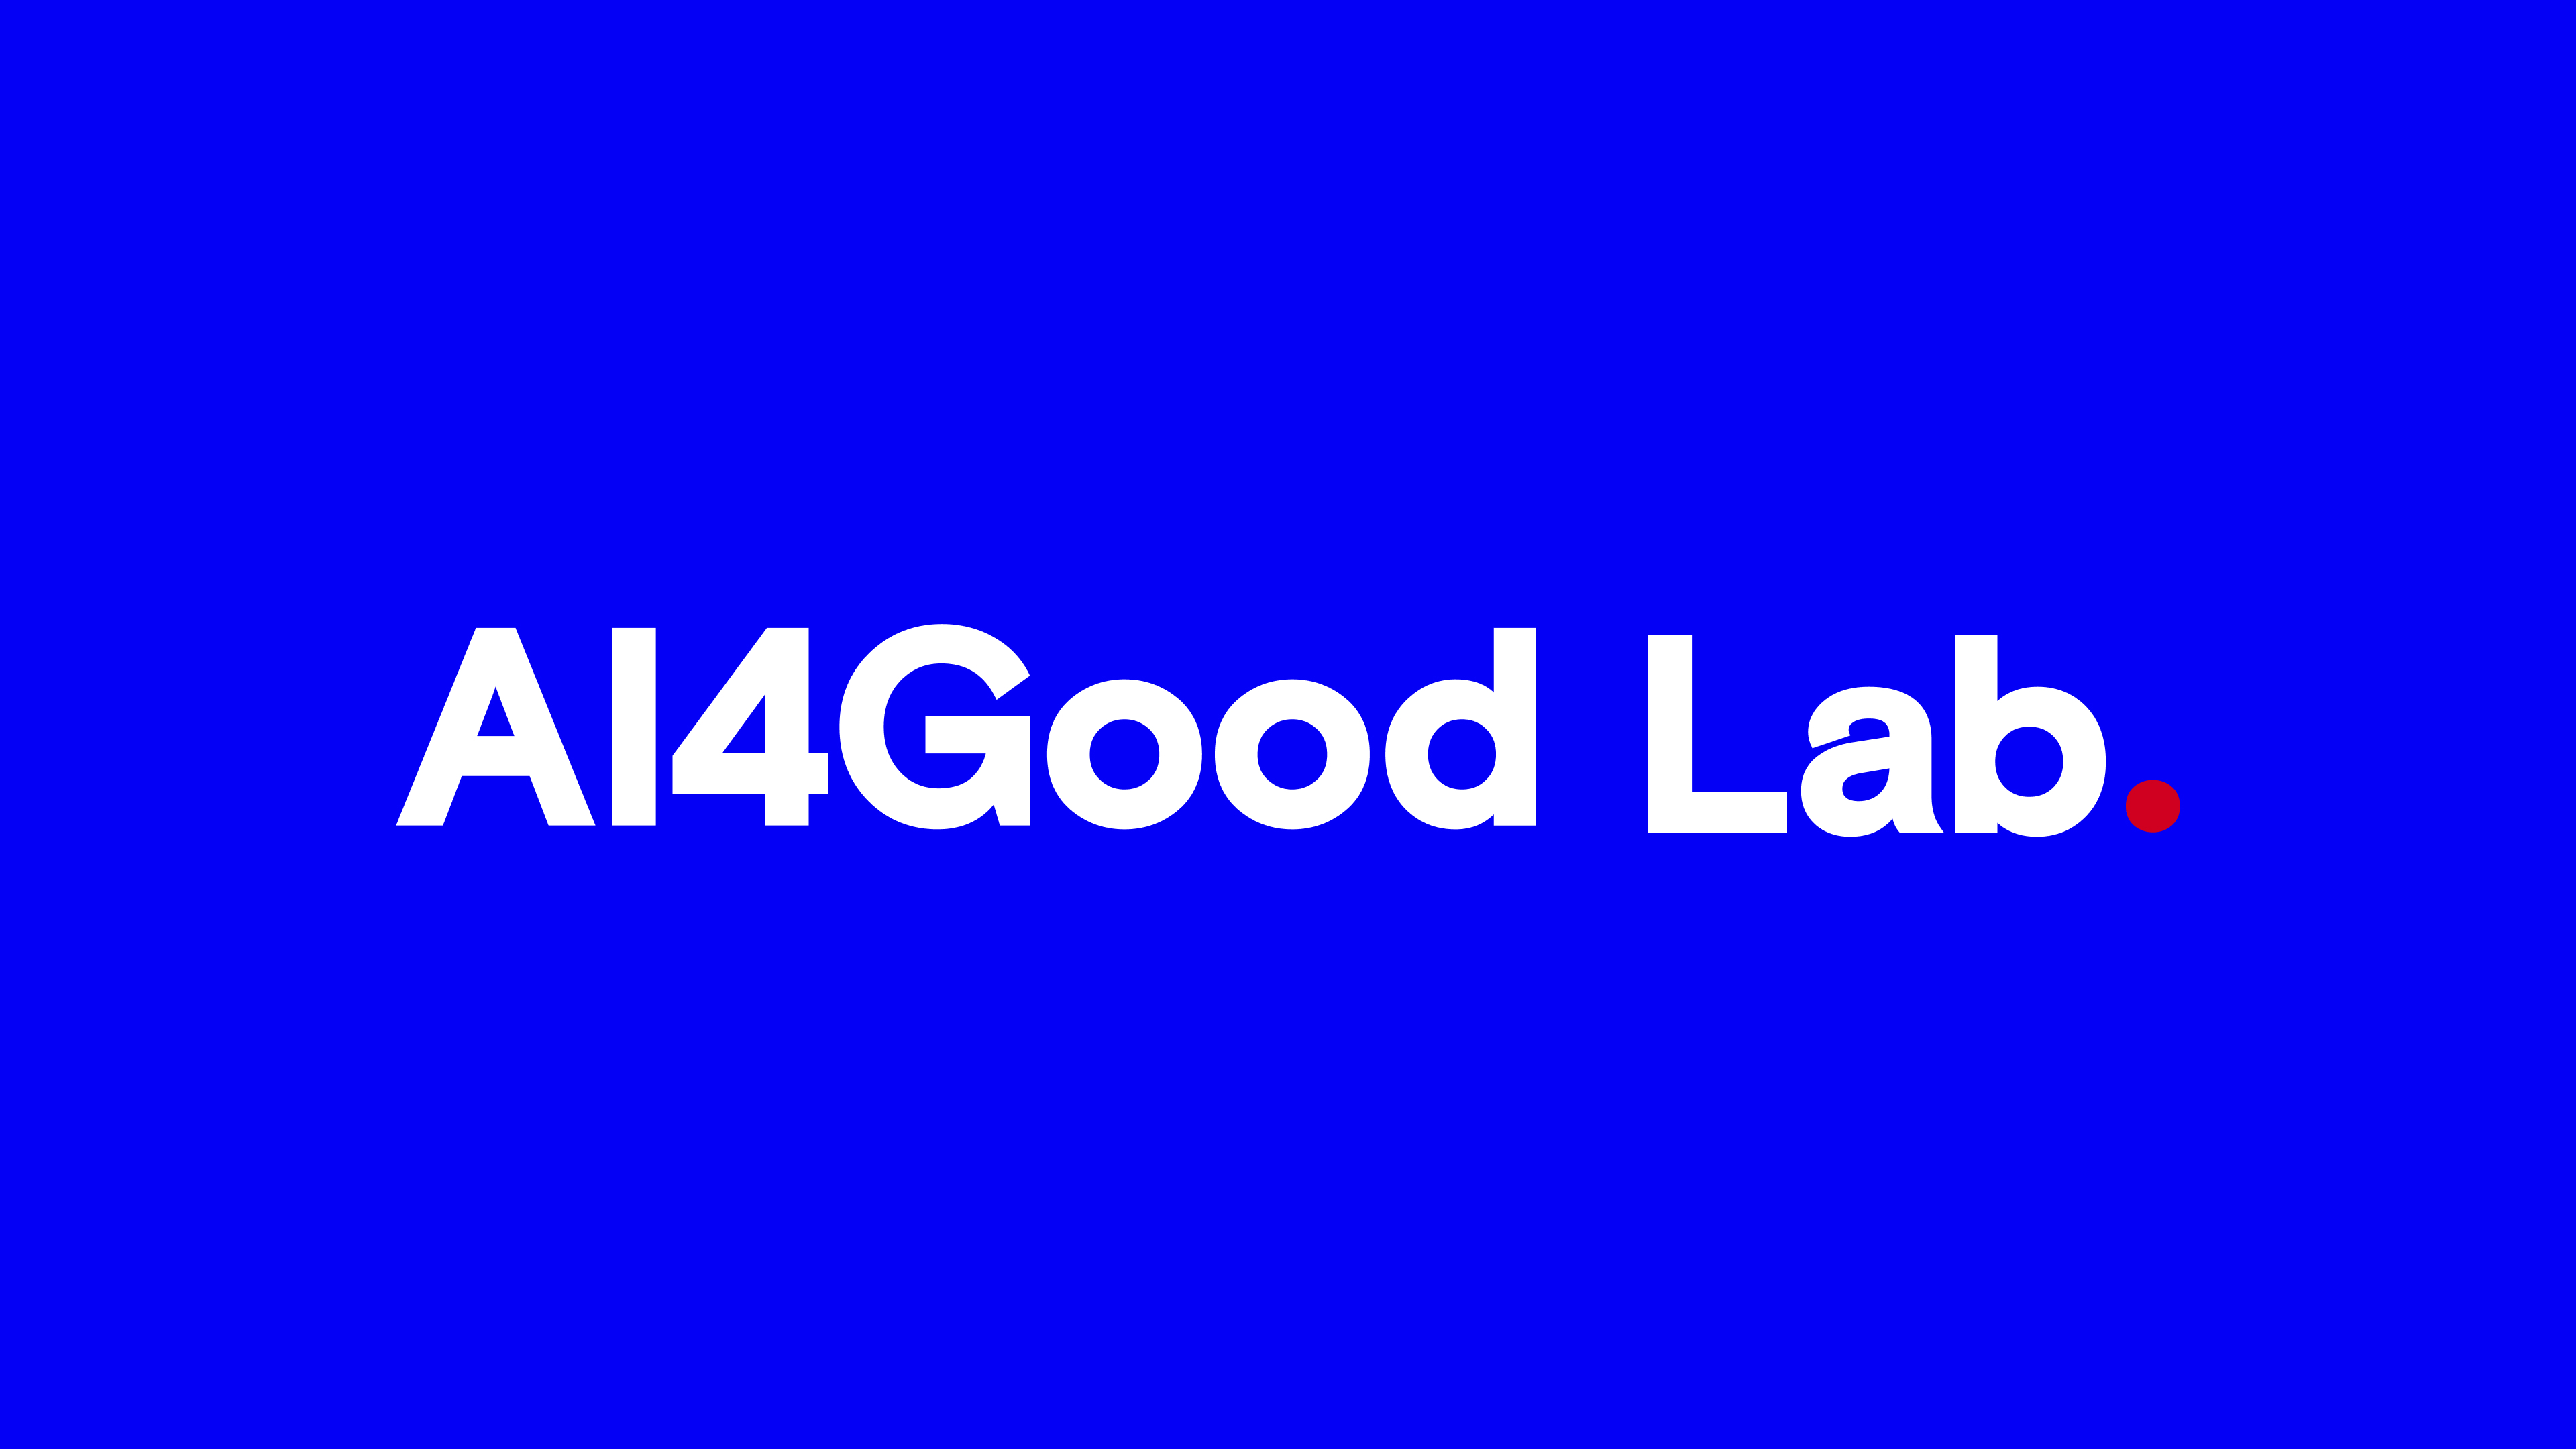 Logo of AI4Good Lab.